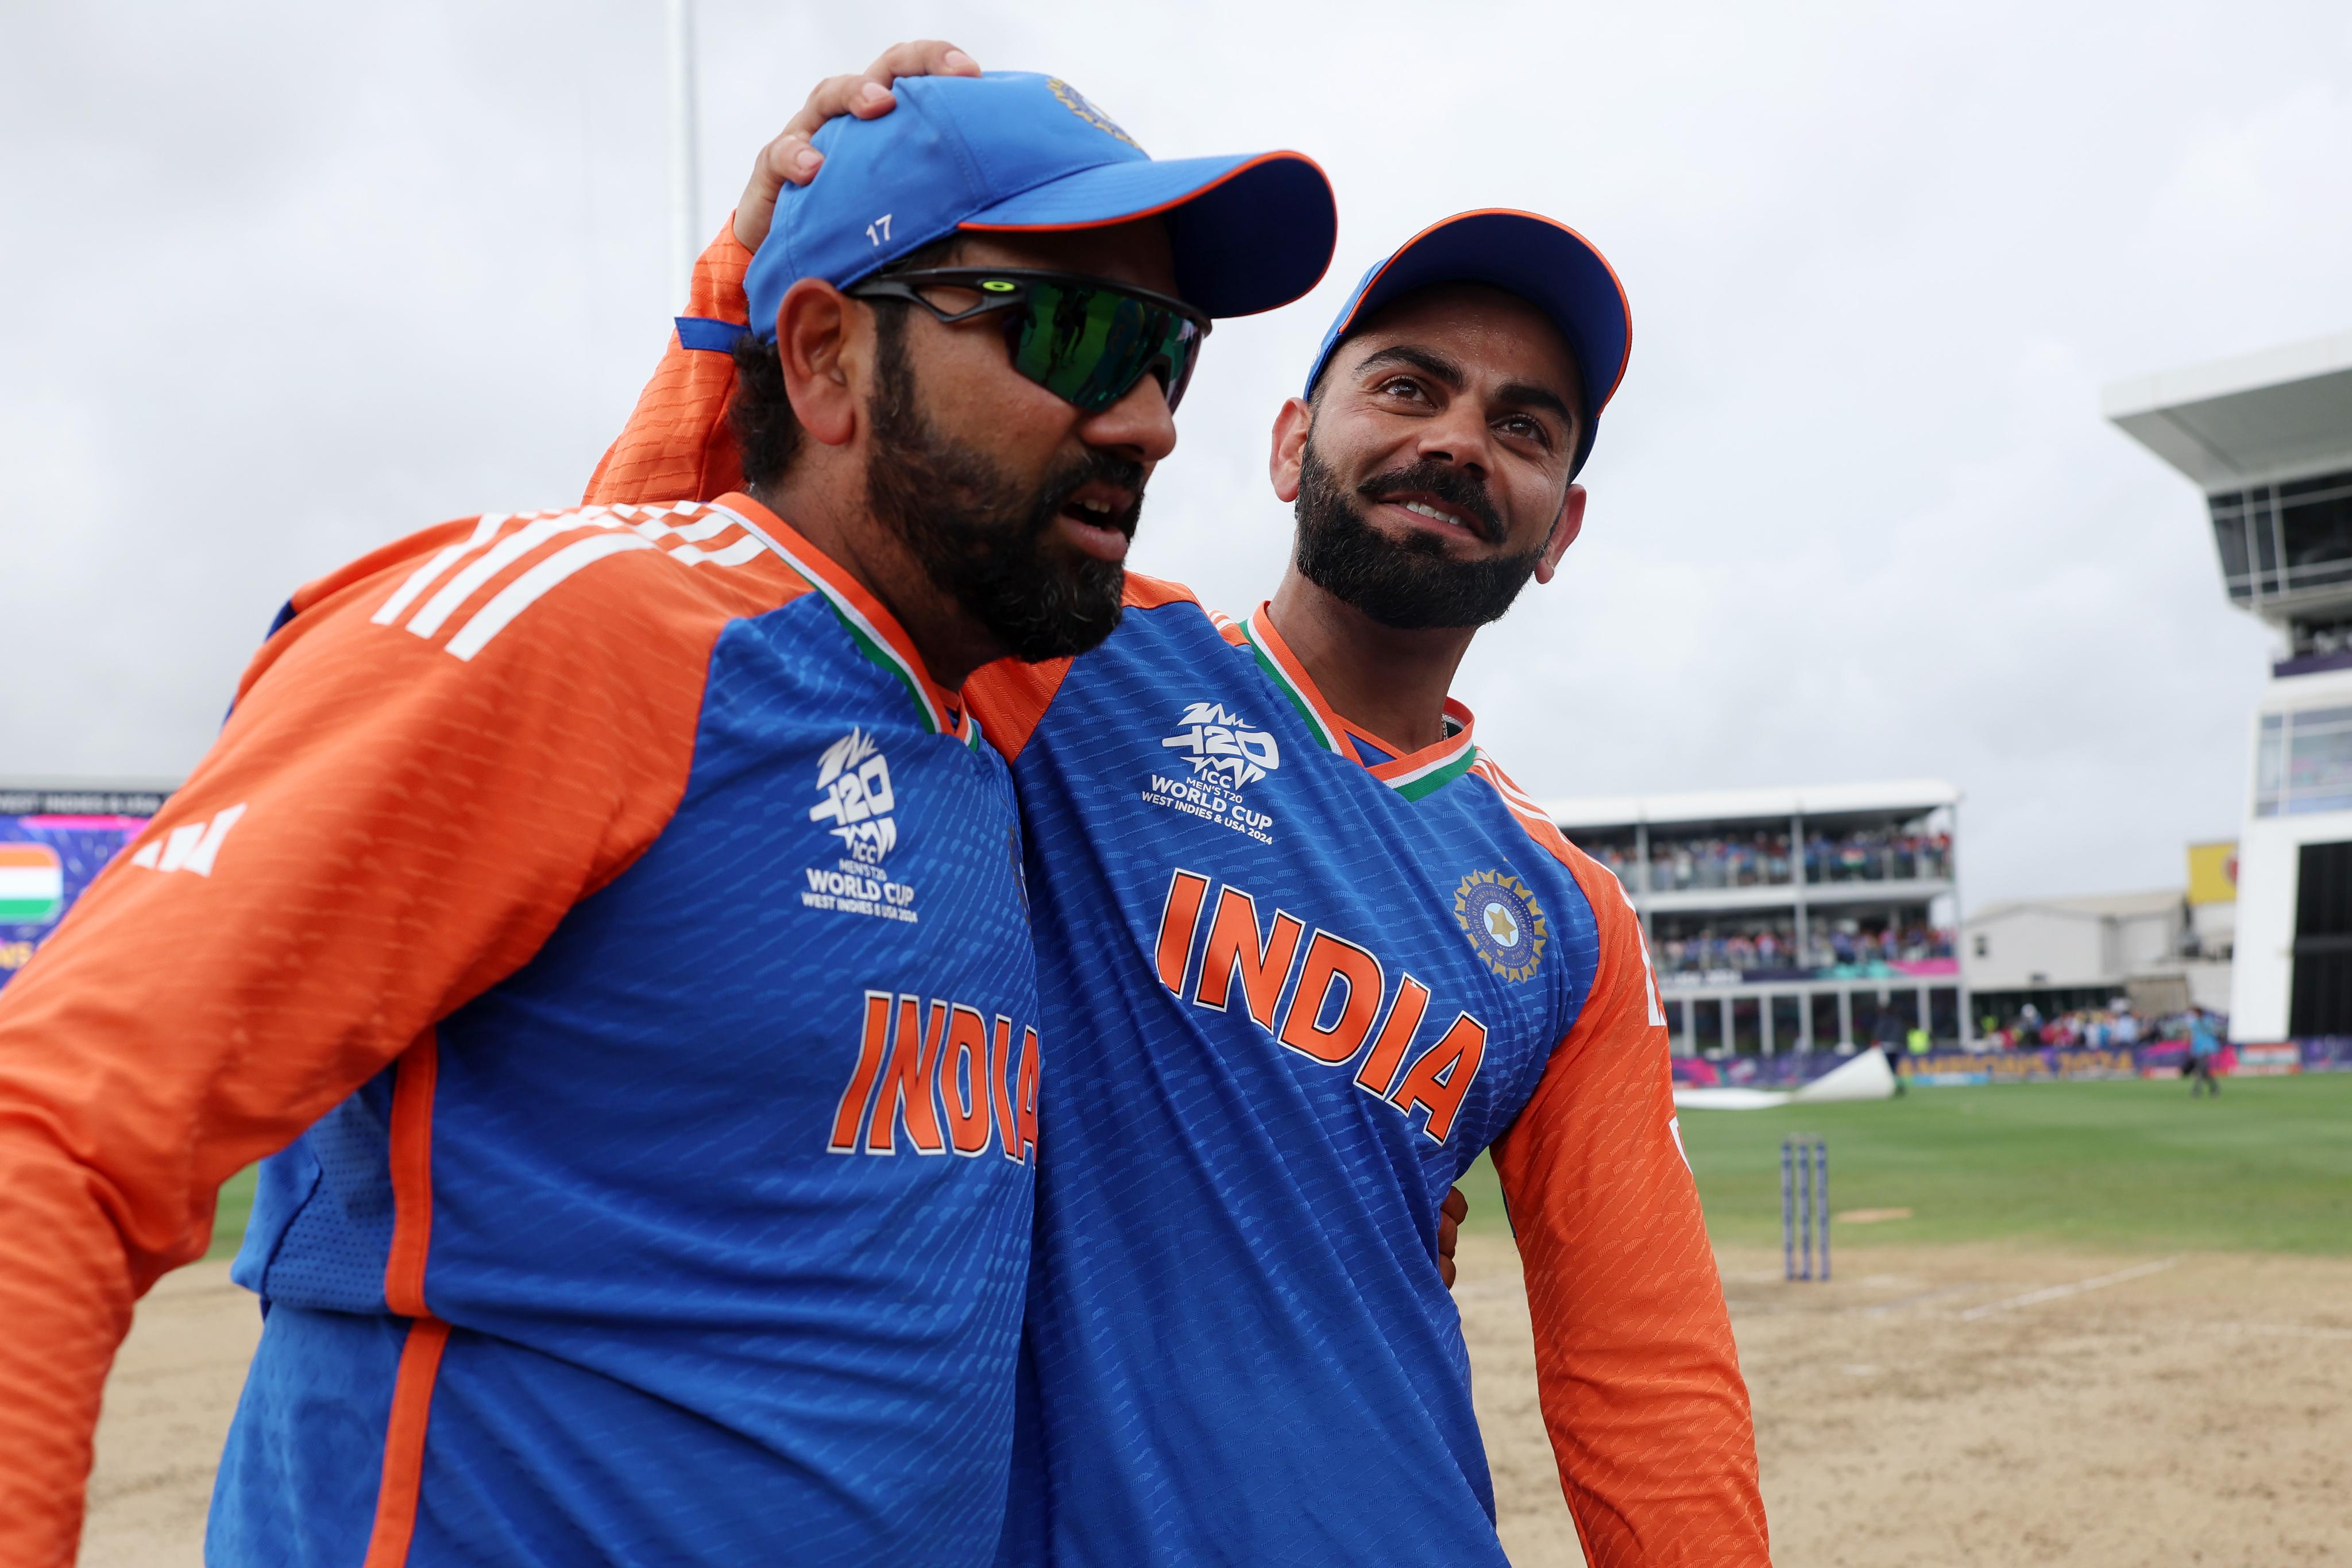 Post-Kohli and Sharma: The Indian T20 Team's Road Ahead